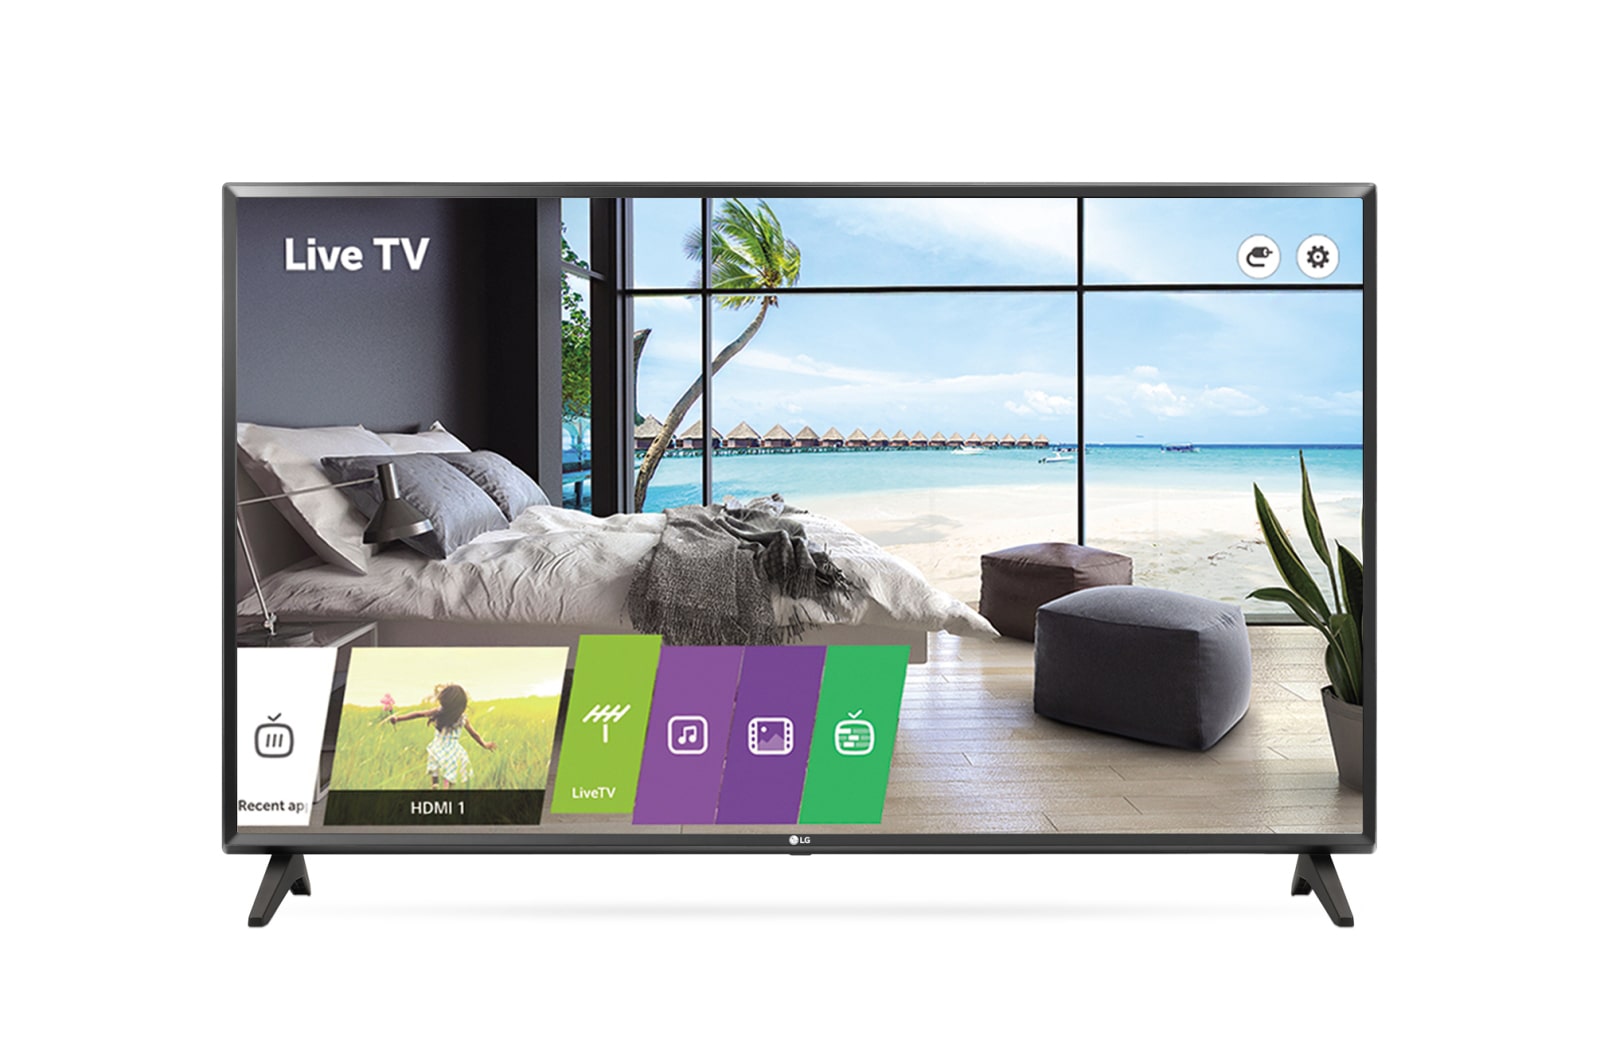 LG LT340C Series - 32" Commercial TV, 32LT340CBCB